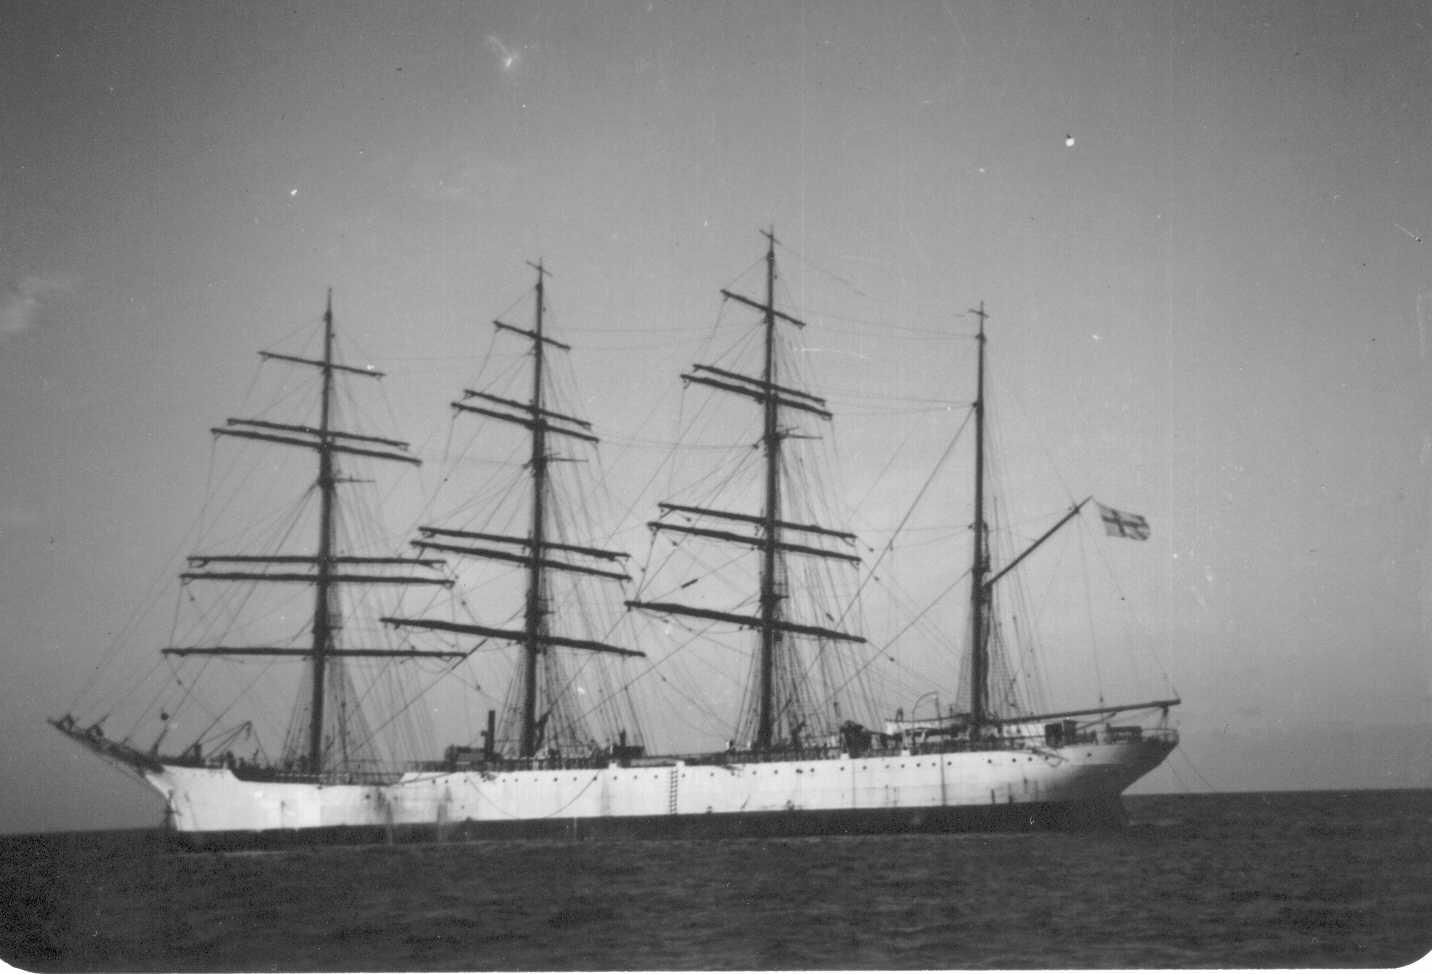 At Port Victoria in 1947